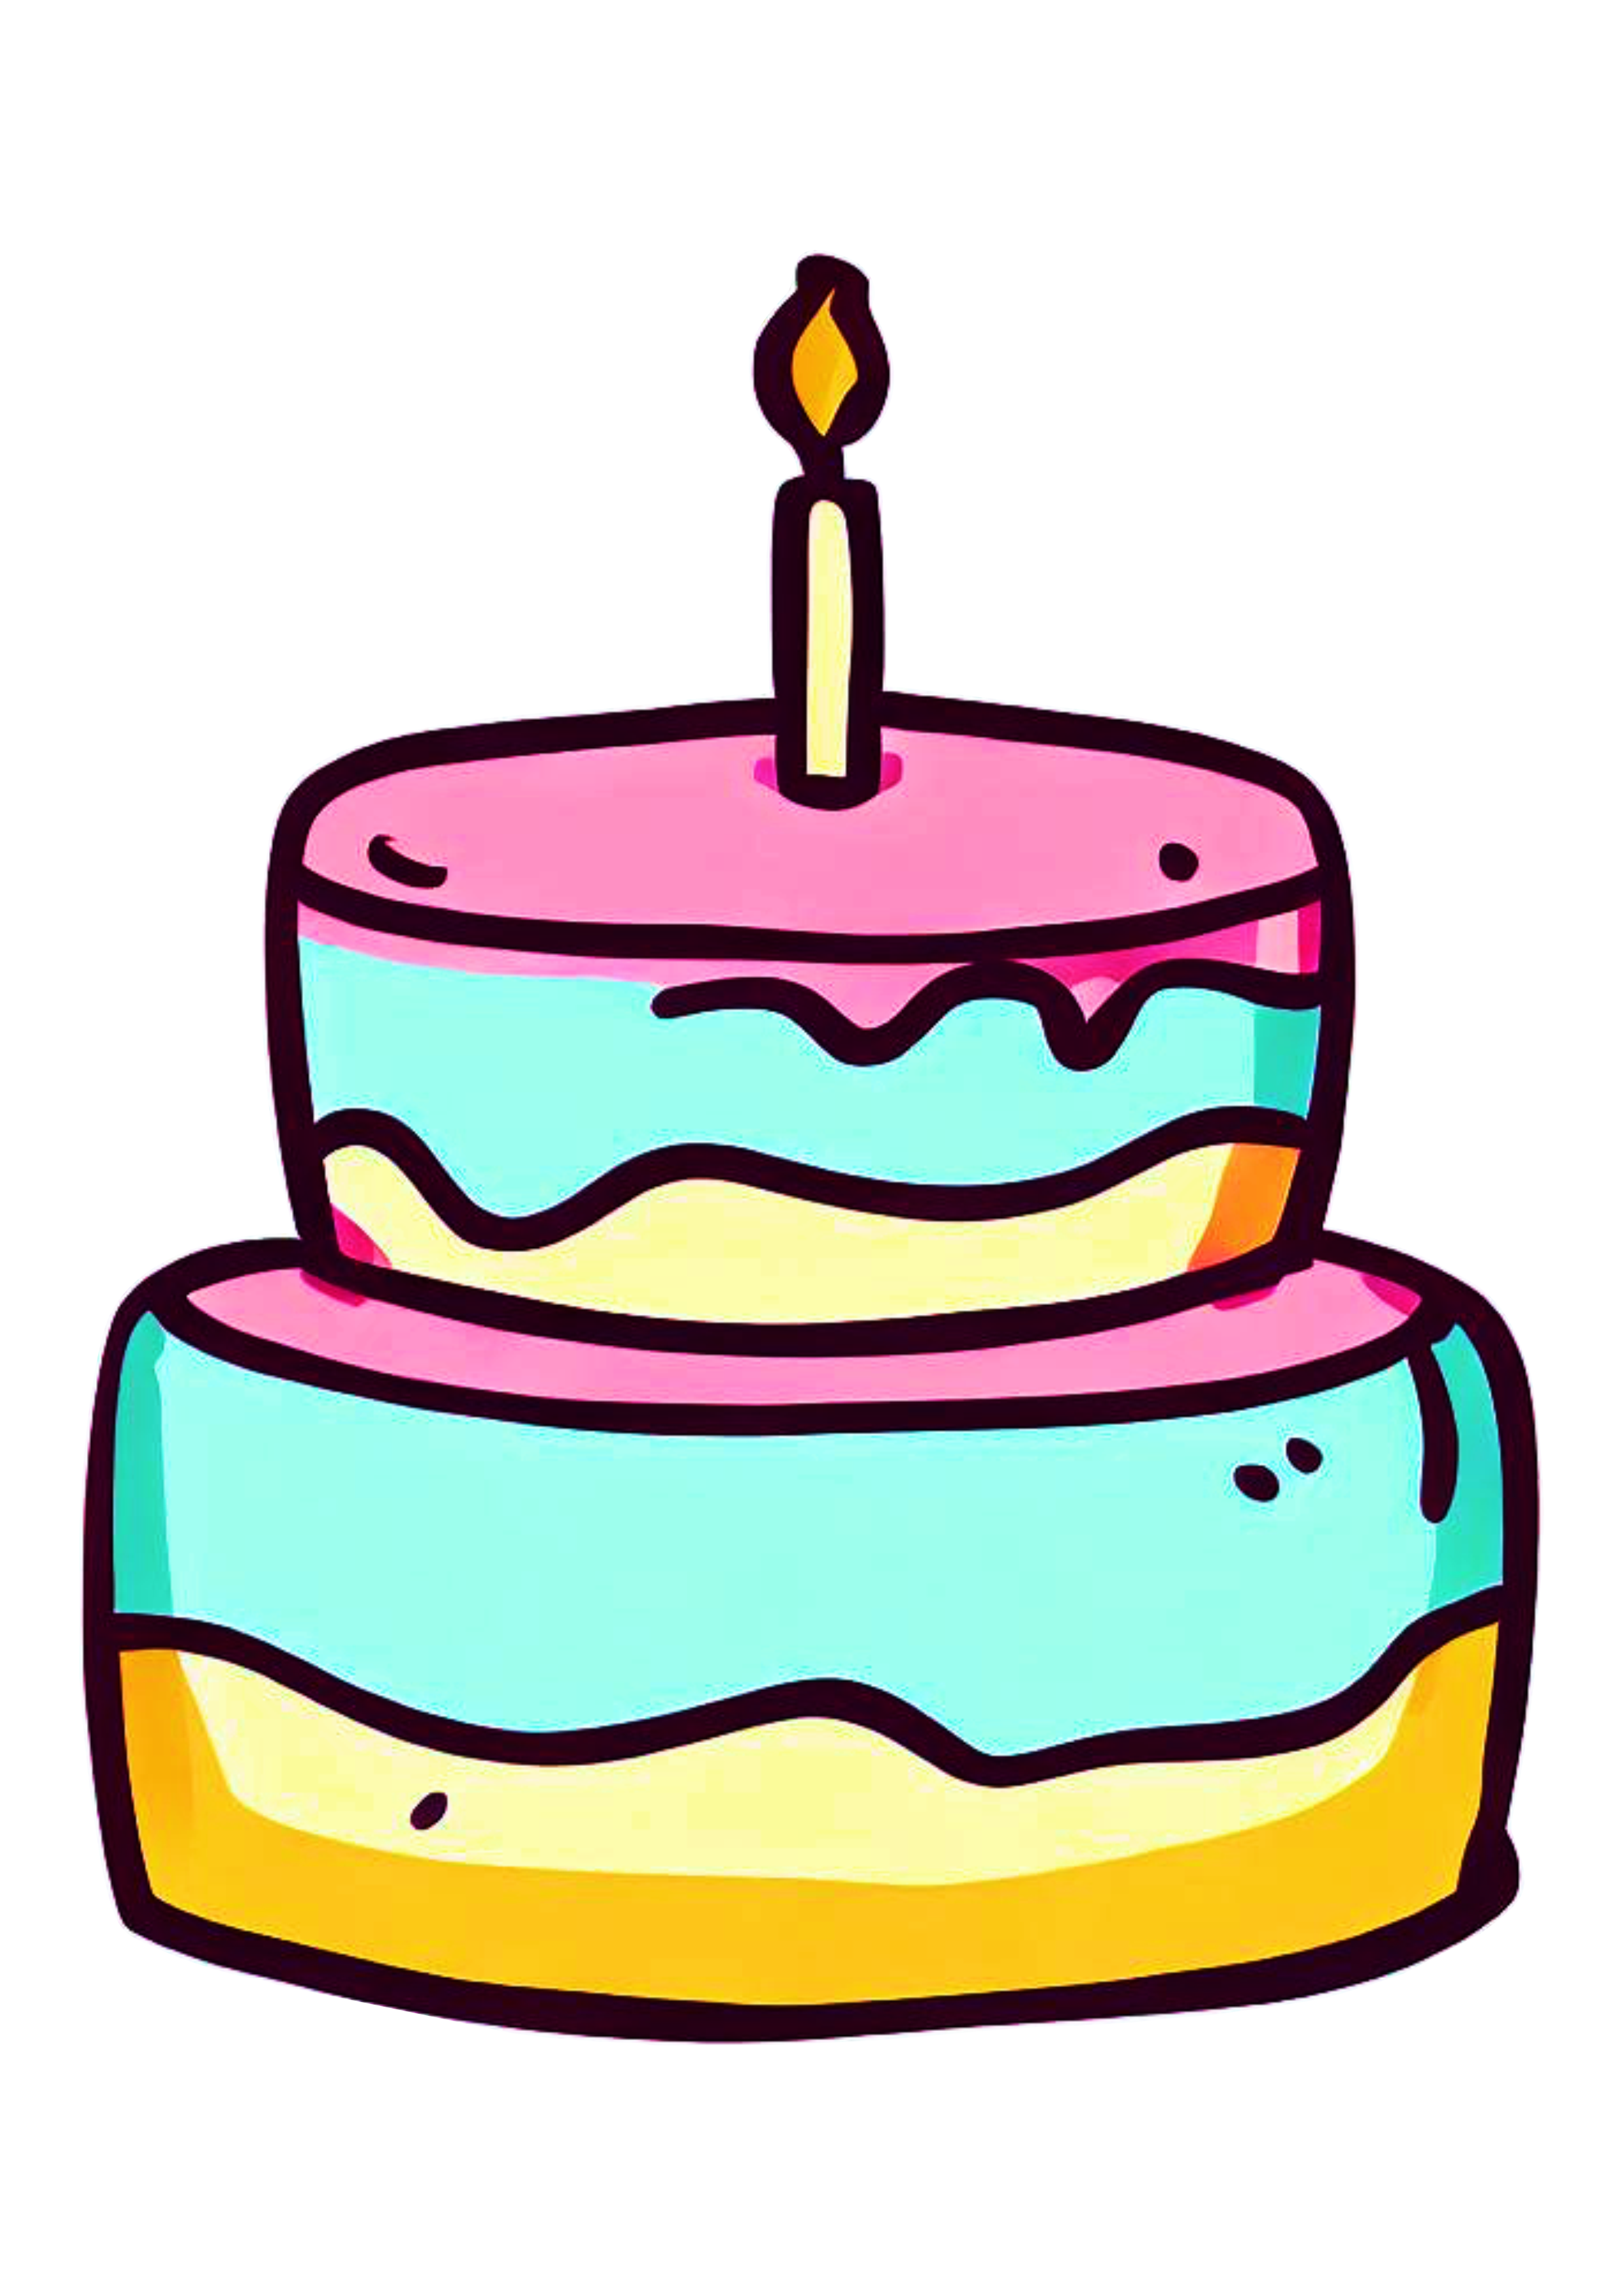 desenho de bolo colorido visto de cima [download] - Designi